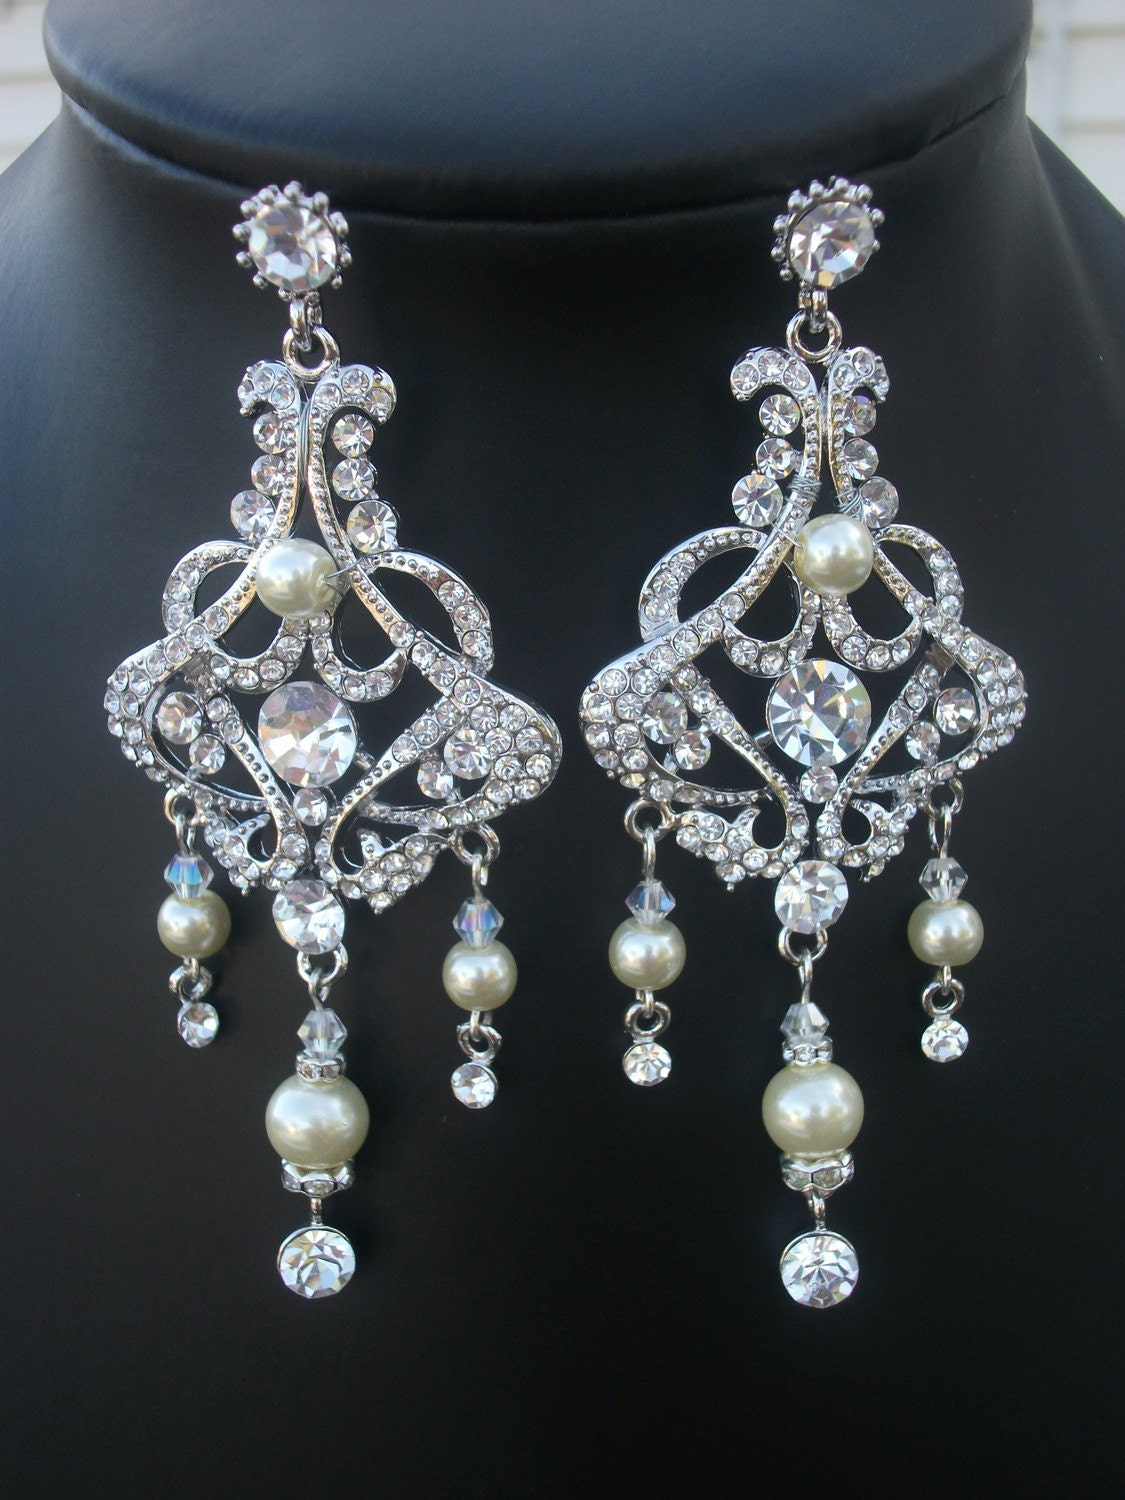 Vera Swarovski crystals and pearls bridal earrings